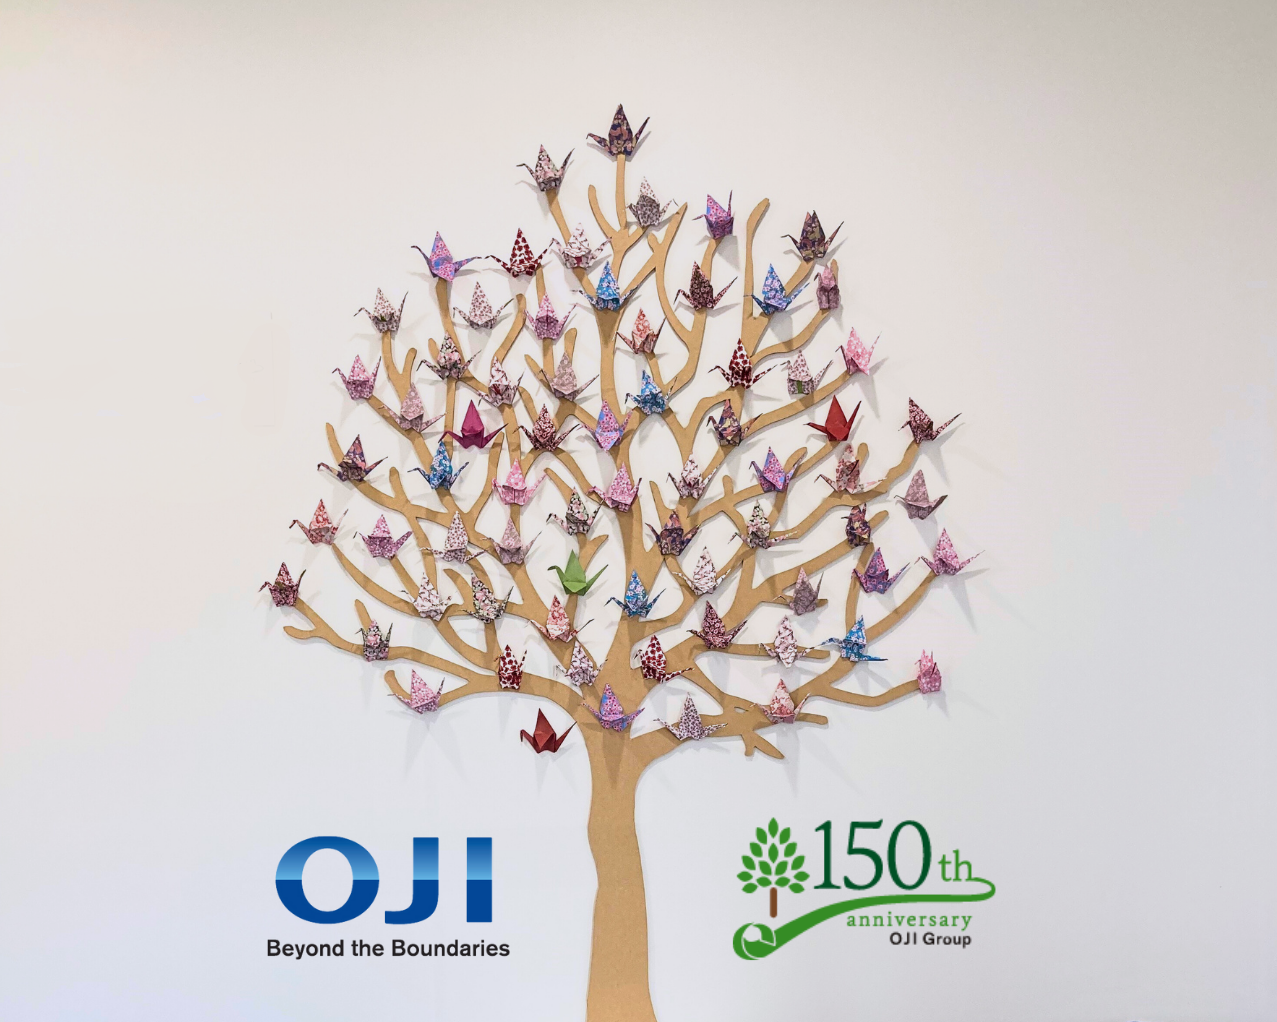 150th anniversary Oji group